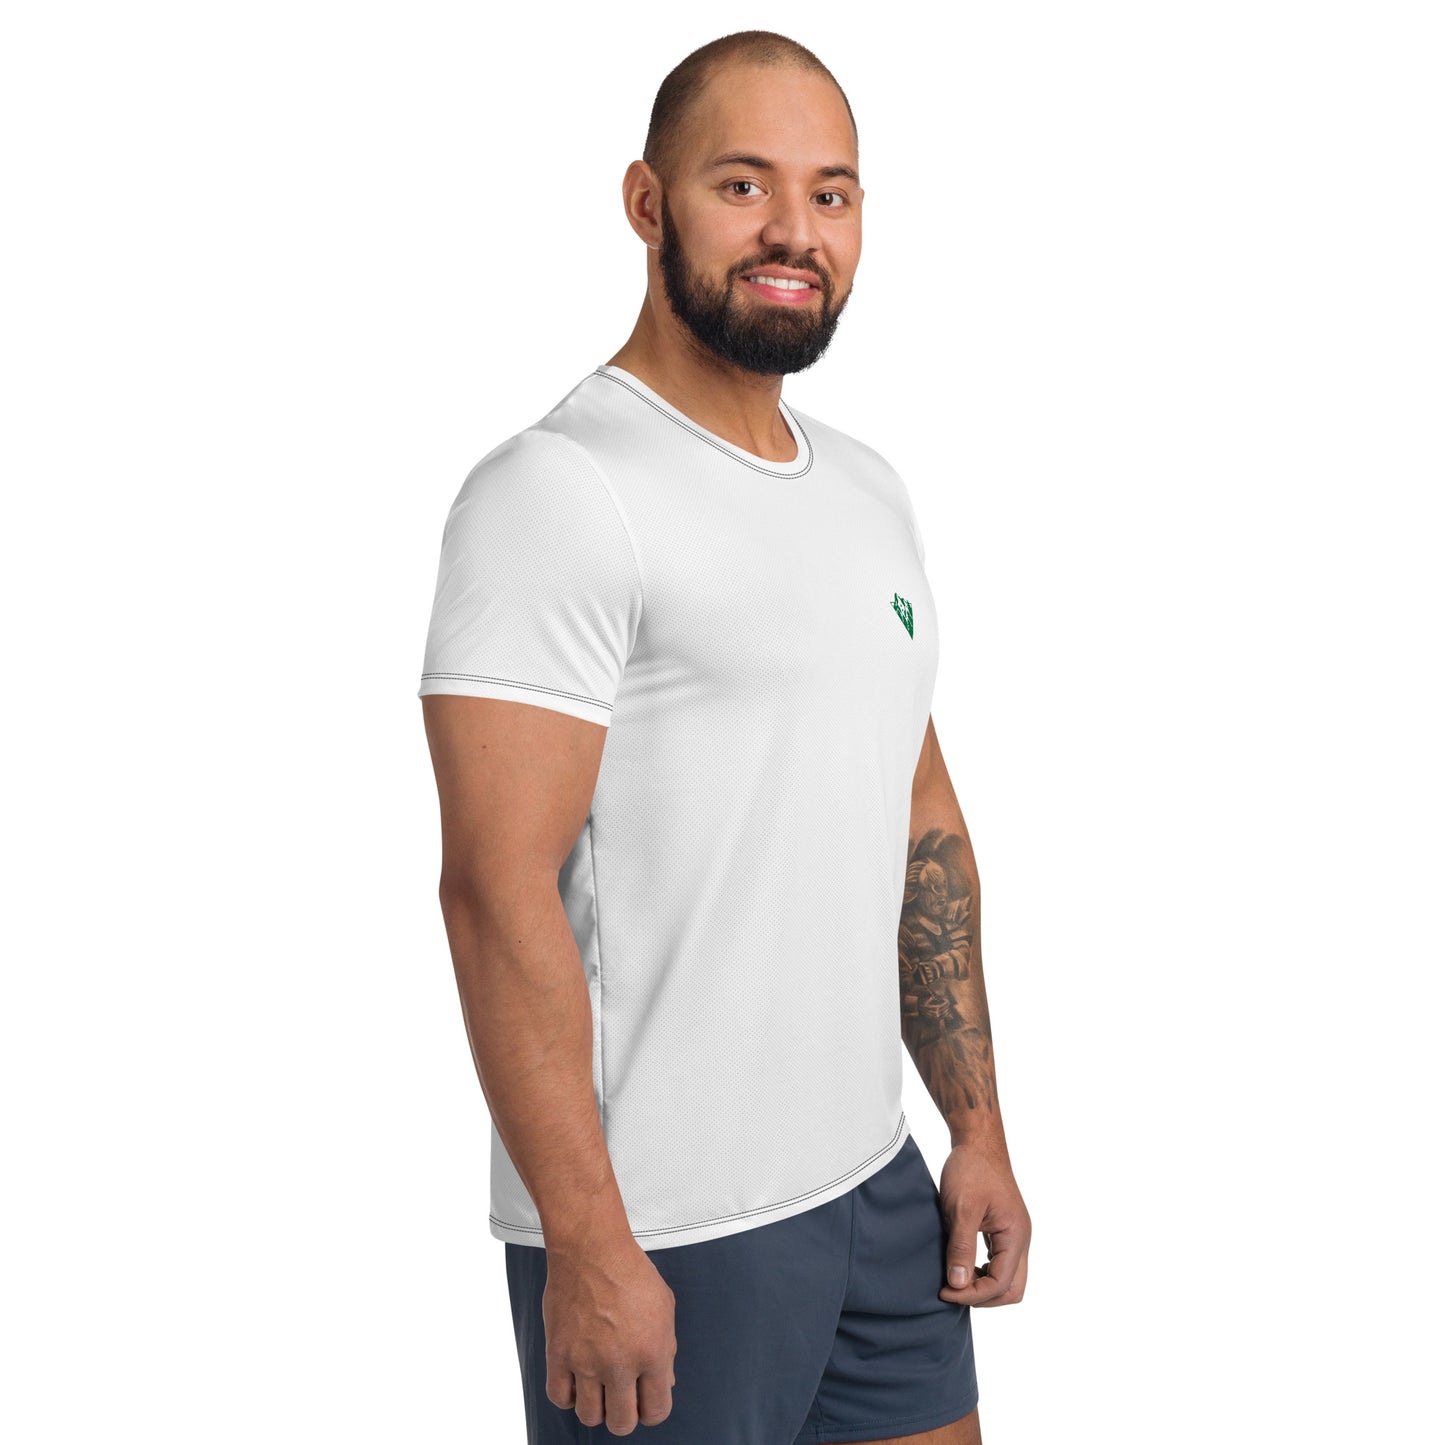 SISU Athletic T-shirt White